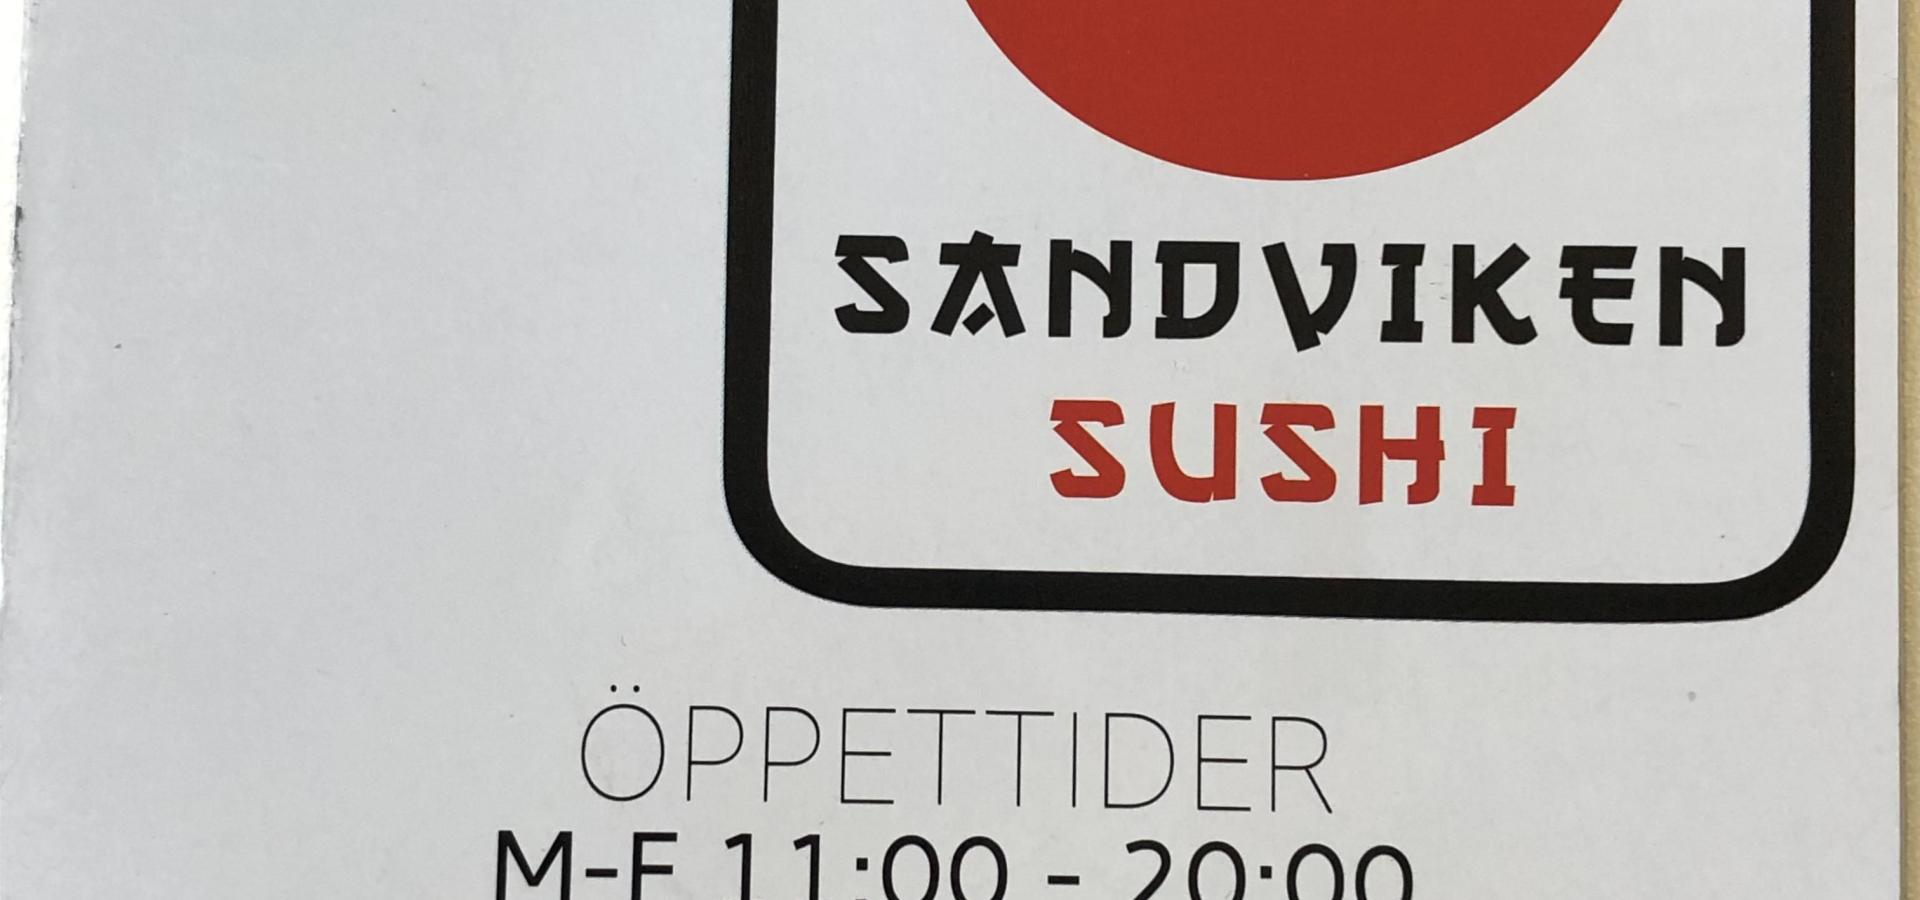 Sandviken Sushi